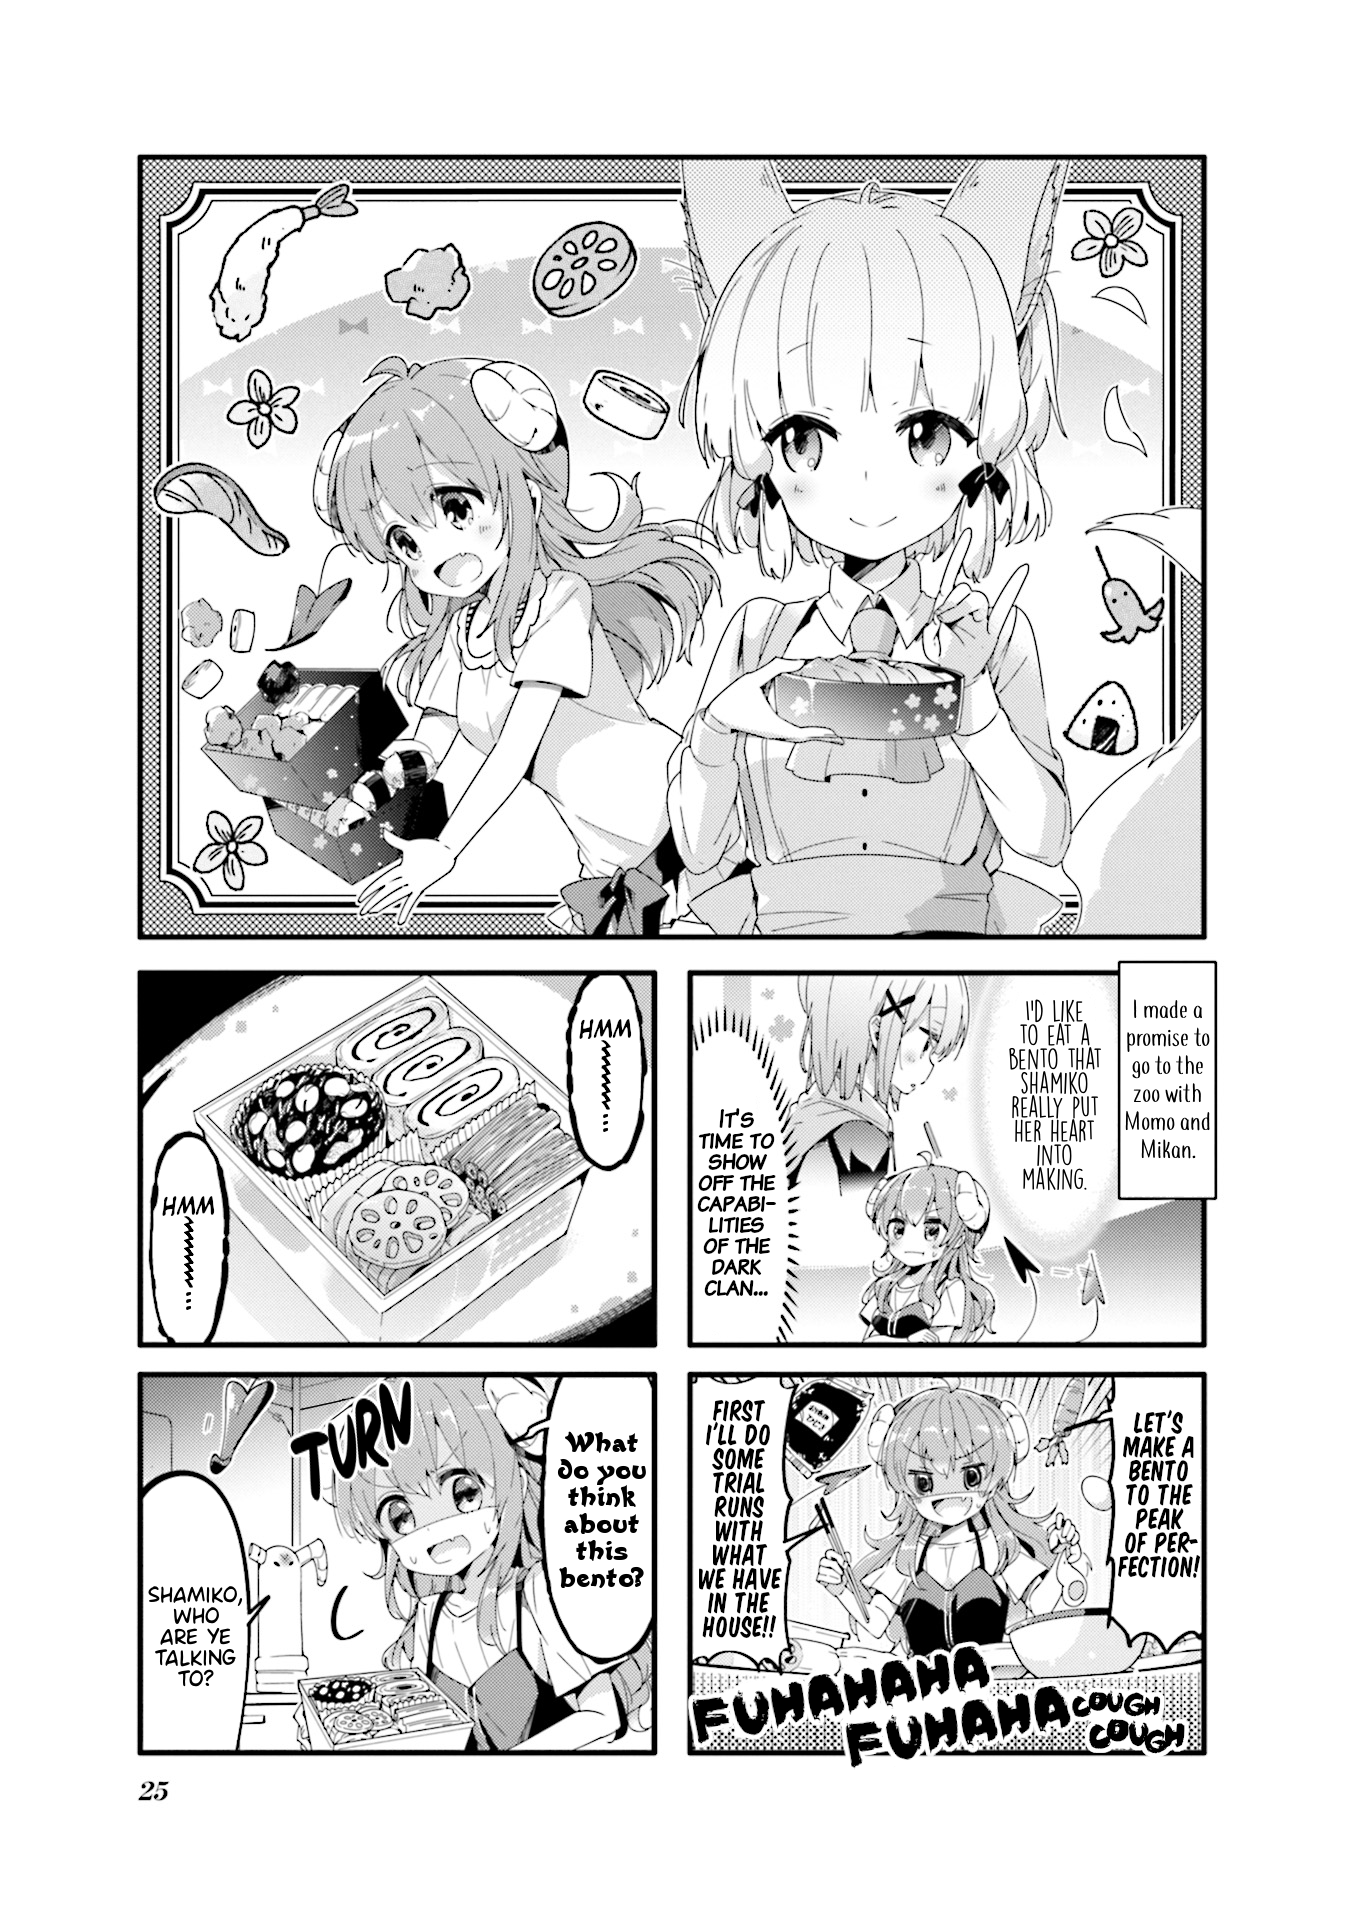 Machikado Mazoku Vol.4 Chapter 42: Win Her Over With Food! Secret Demon Recipe!! - Picture 1